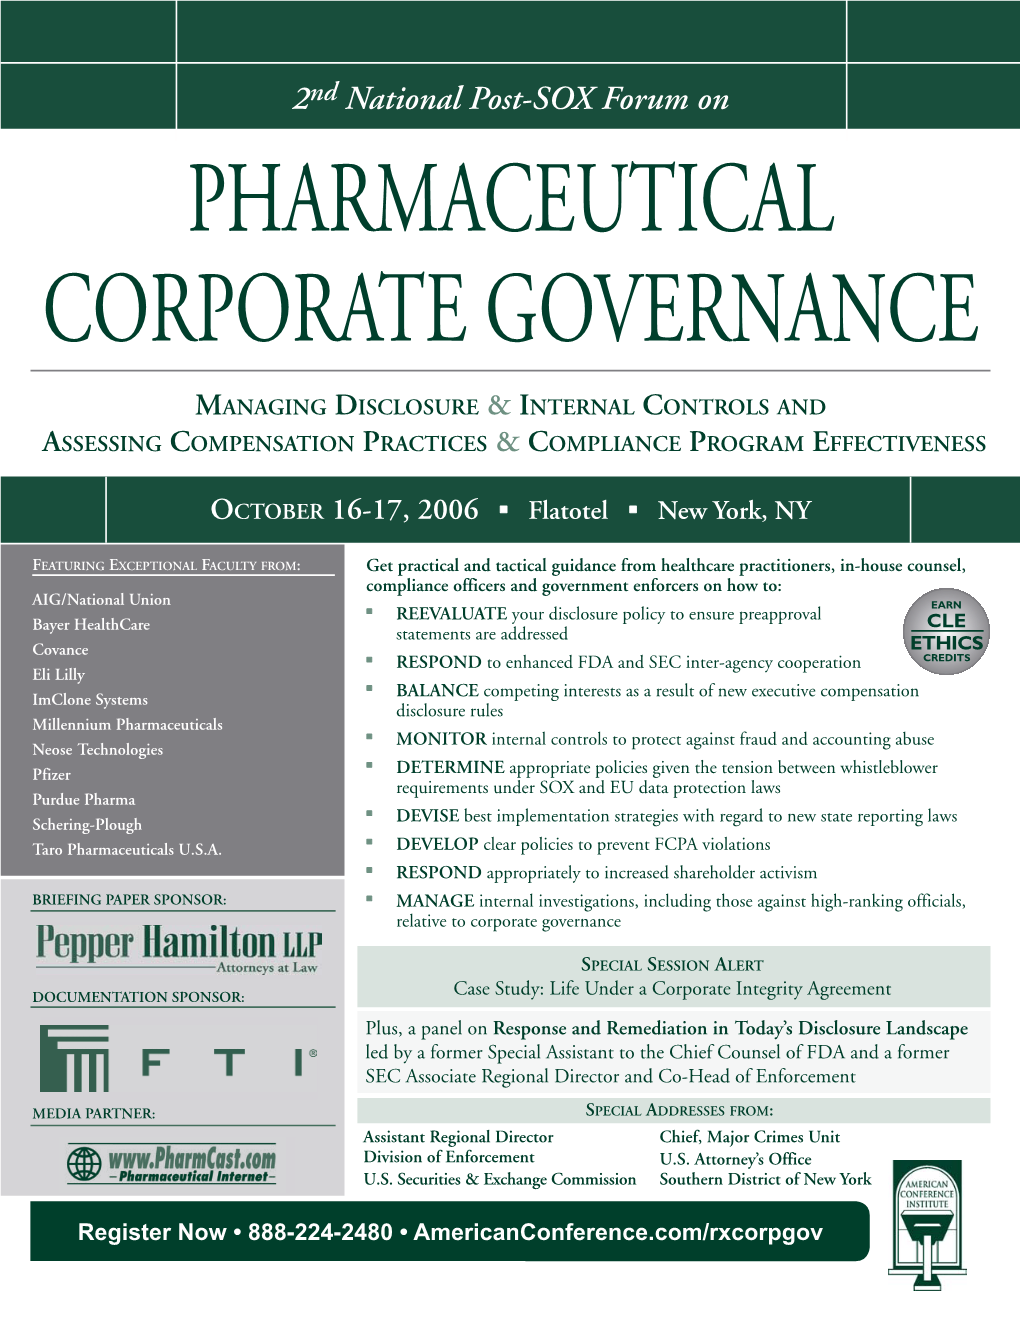 Pharmaceutical Corporate Governance